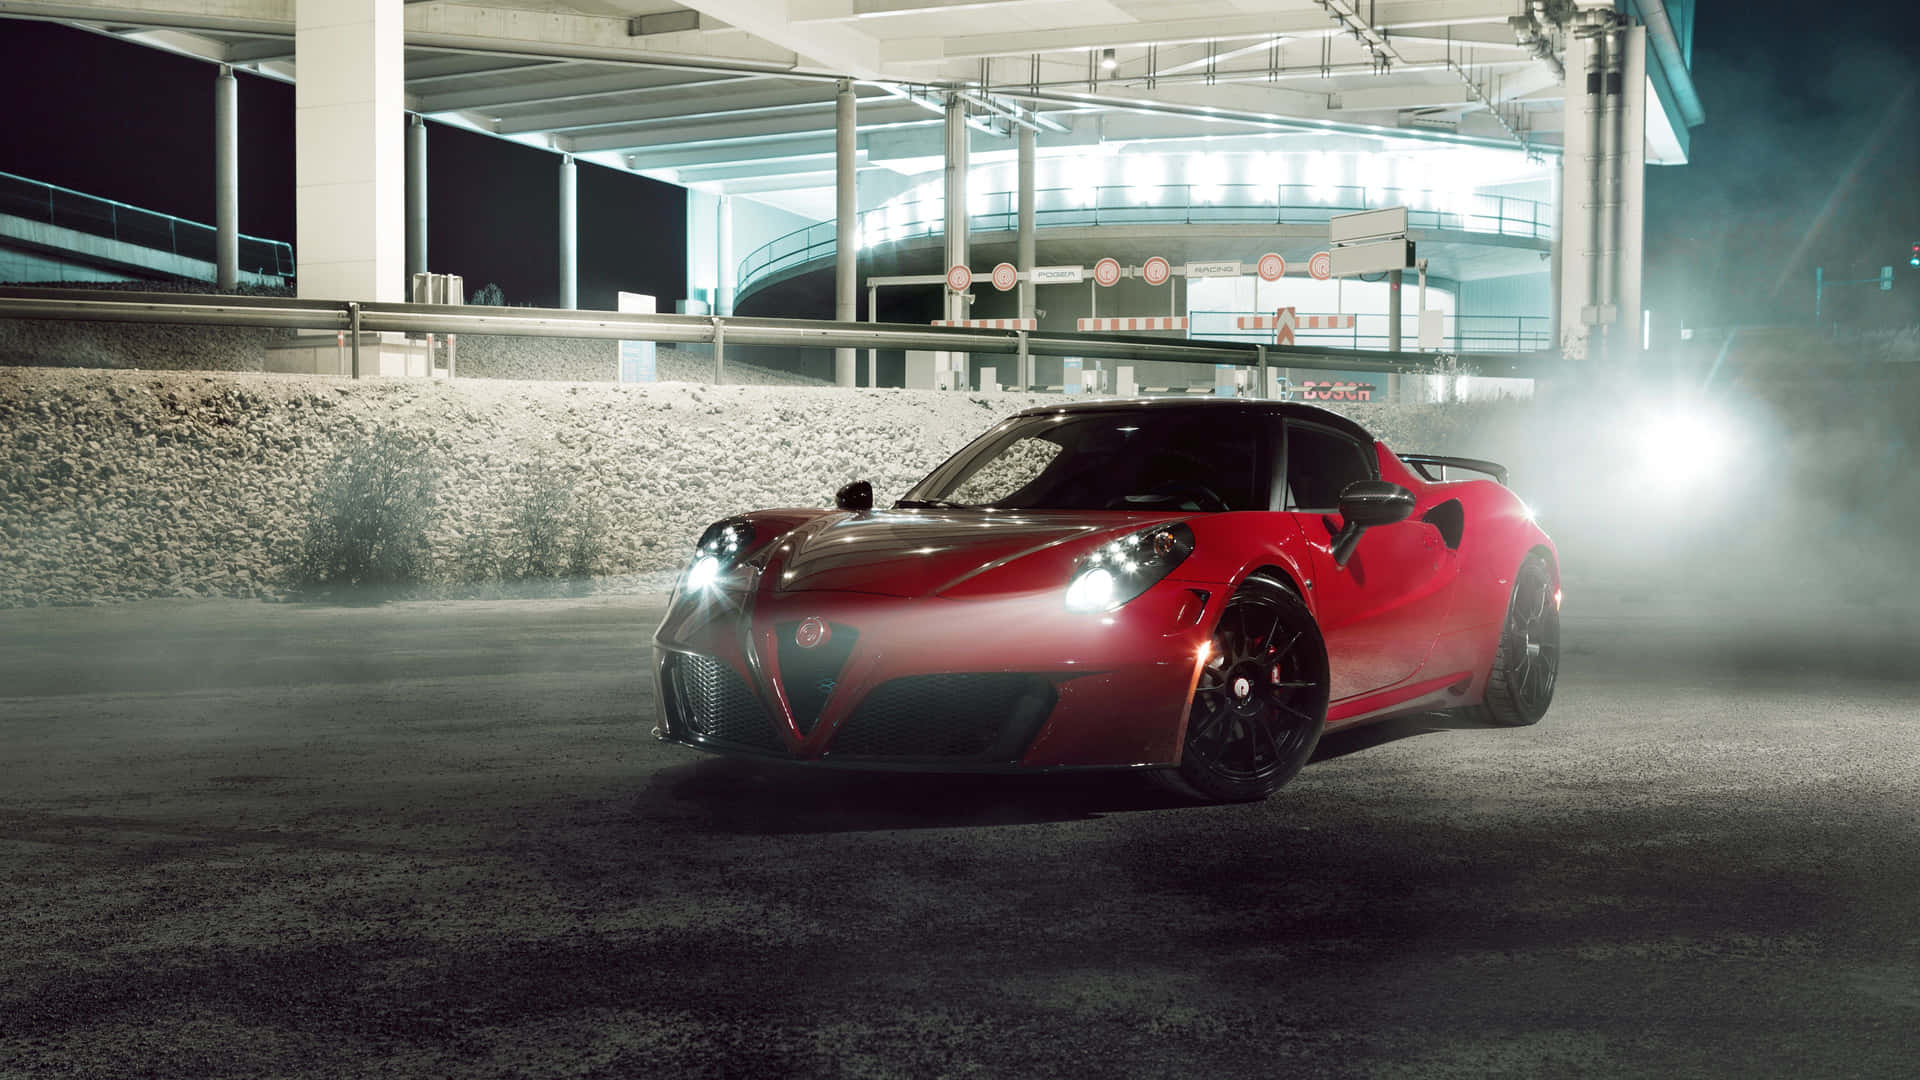 Stunning Alfa Romeo 4c In Action Background